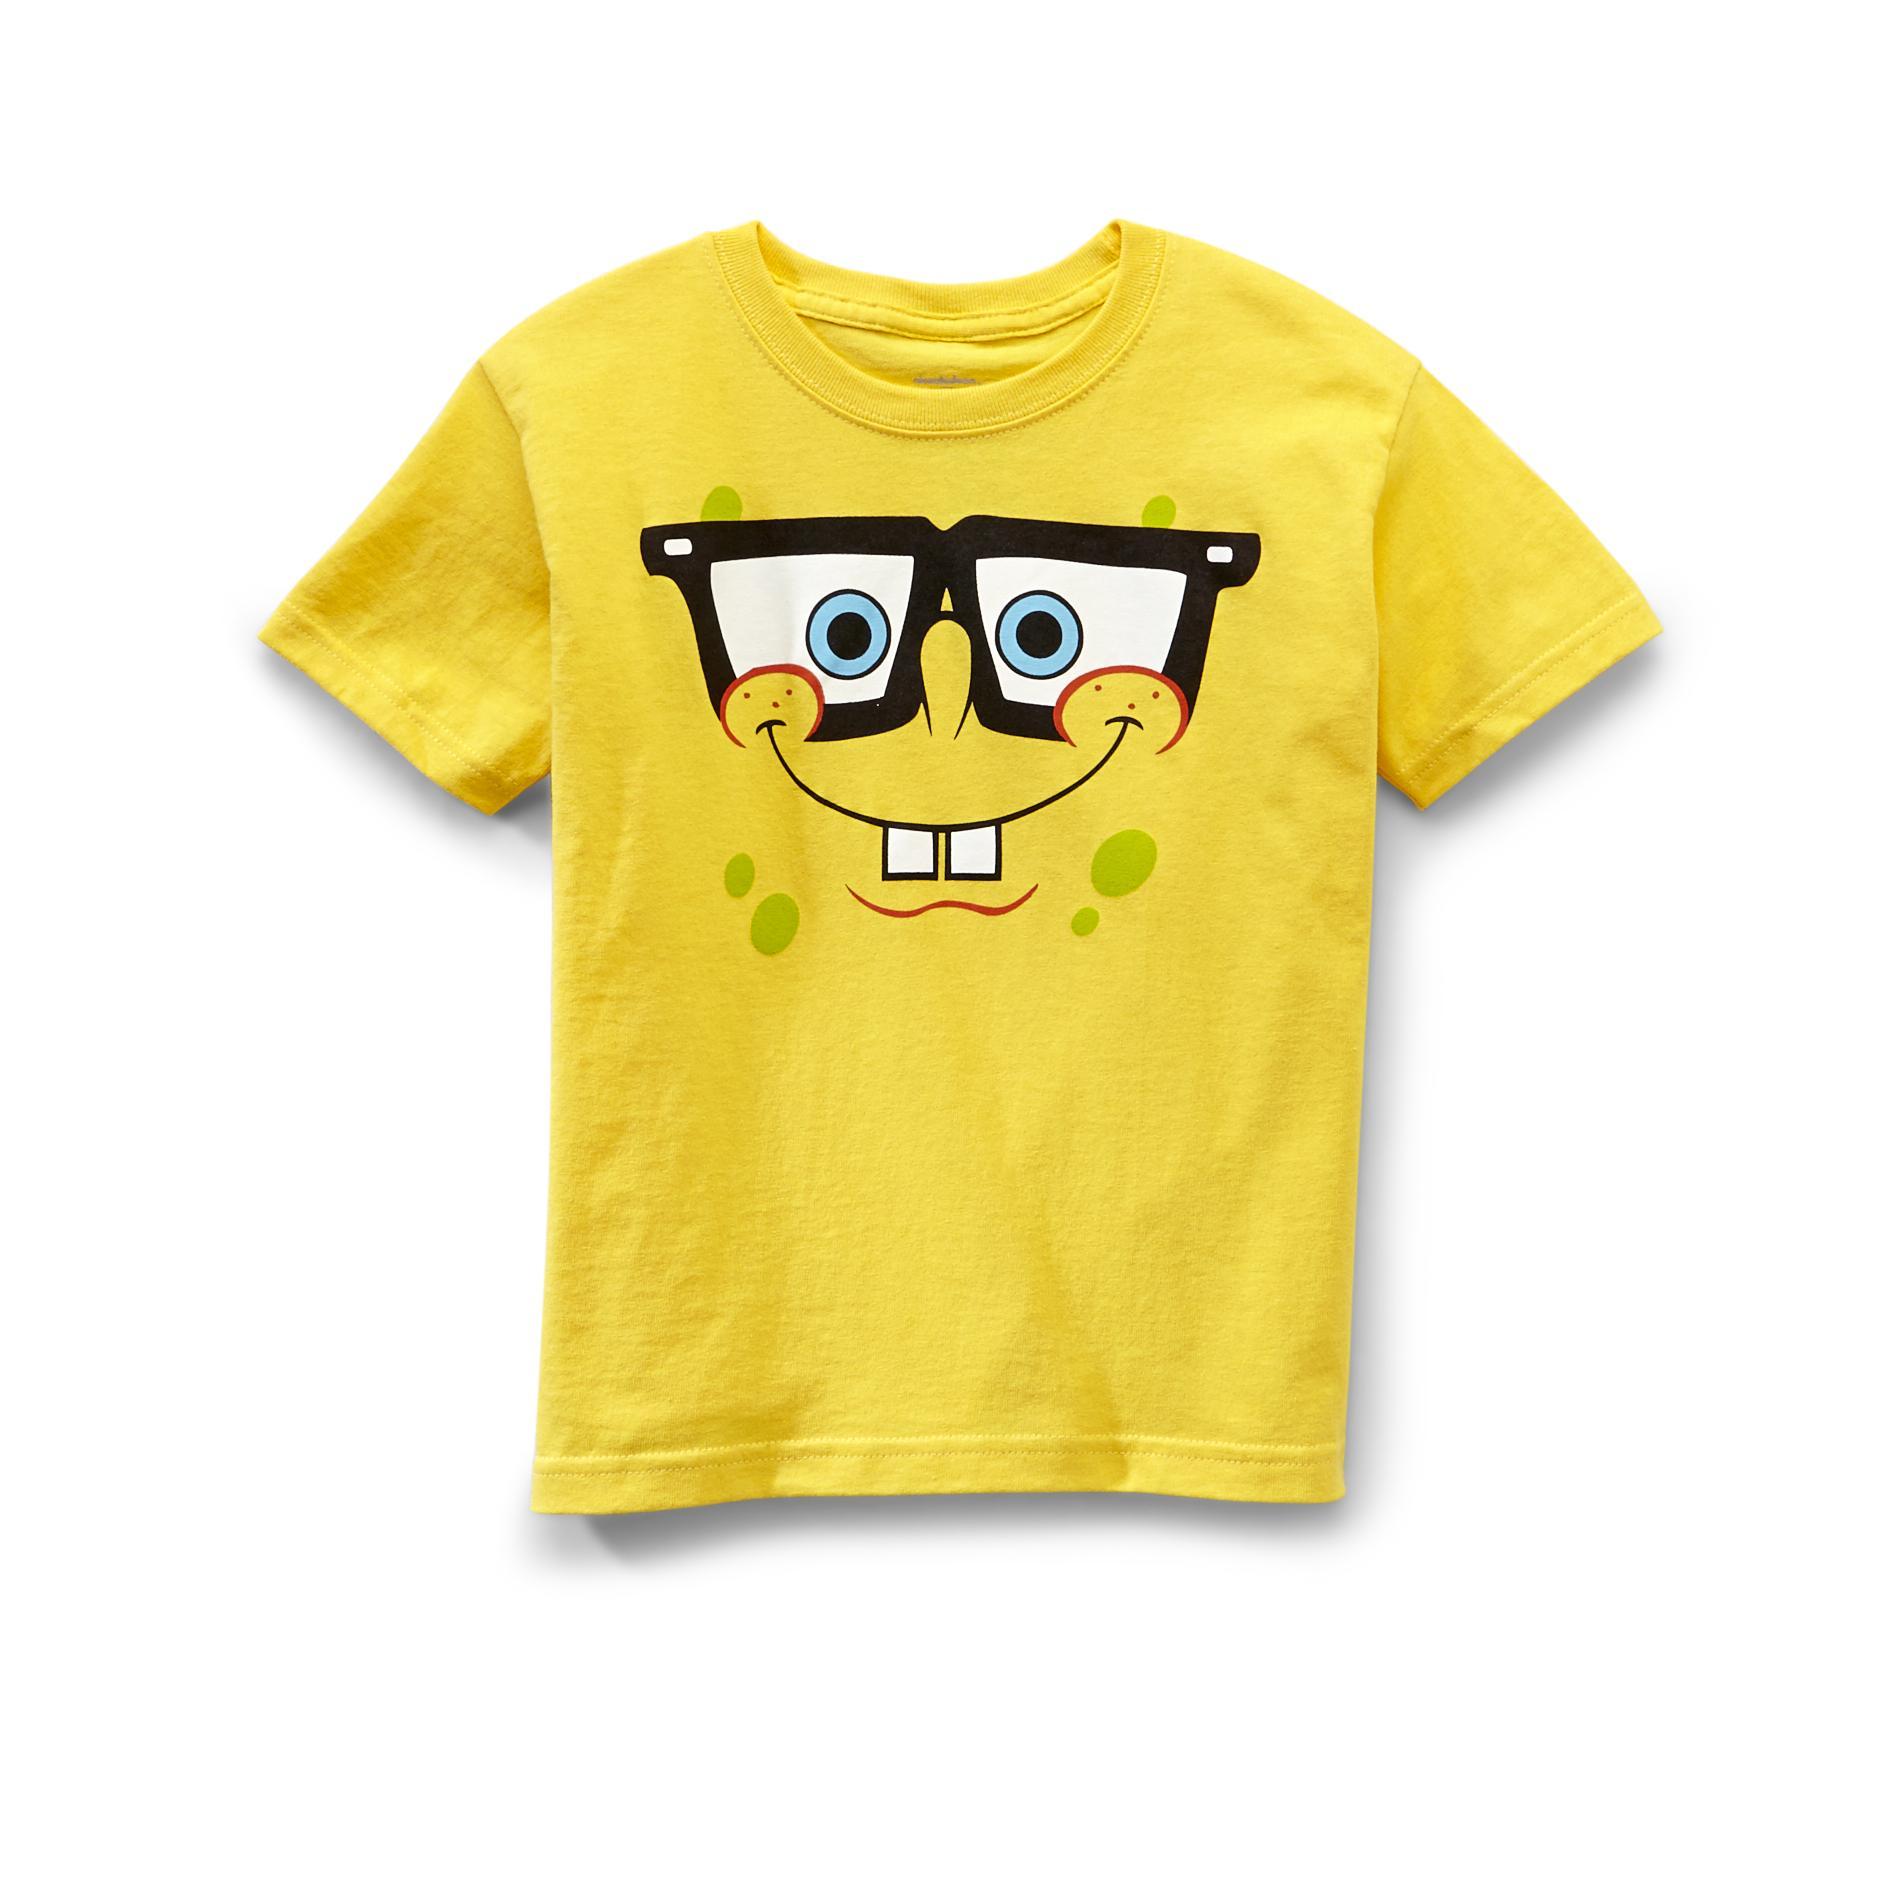 Nickelodeon SpongeBob SquarePants Boy's T-Shirt